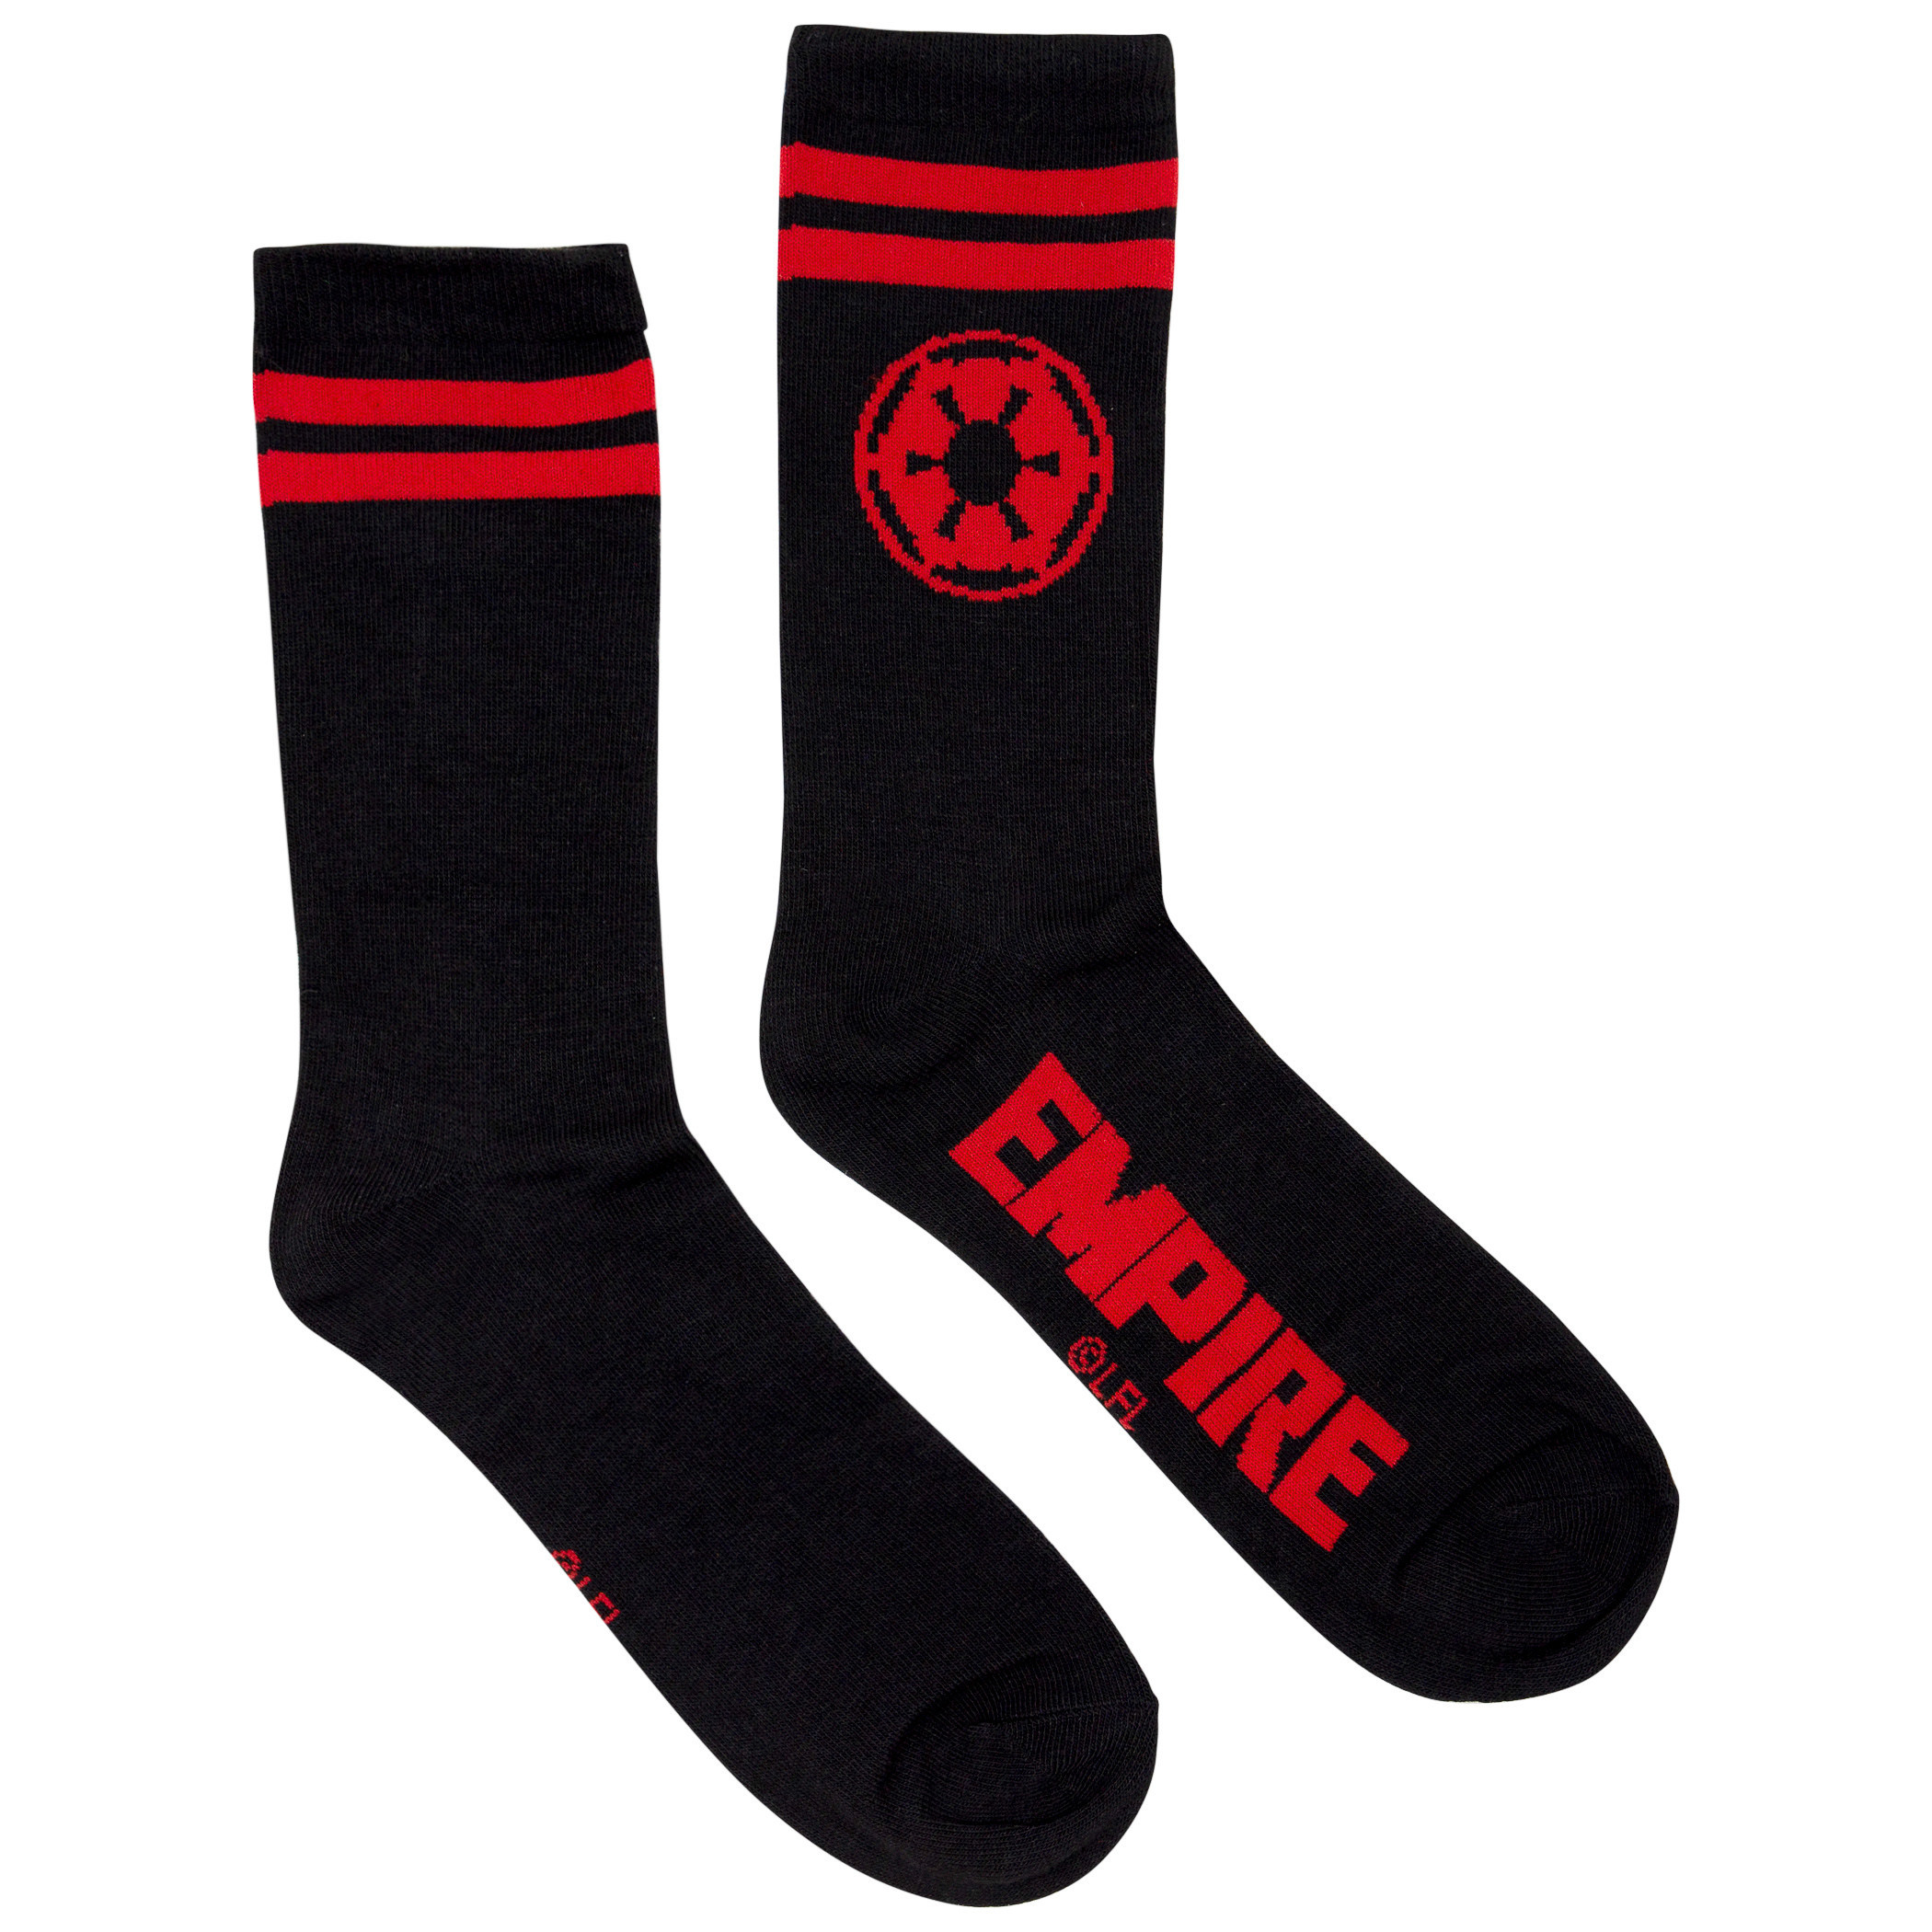 Star Wars Jedi and Empire Symbols Crew Socks 2-Pair Pack